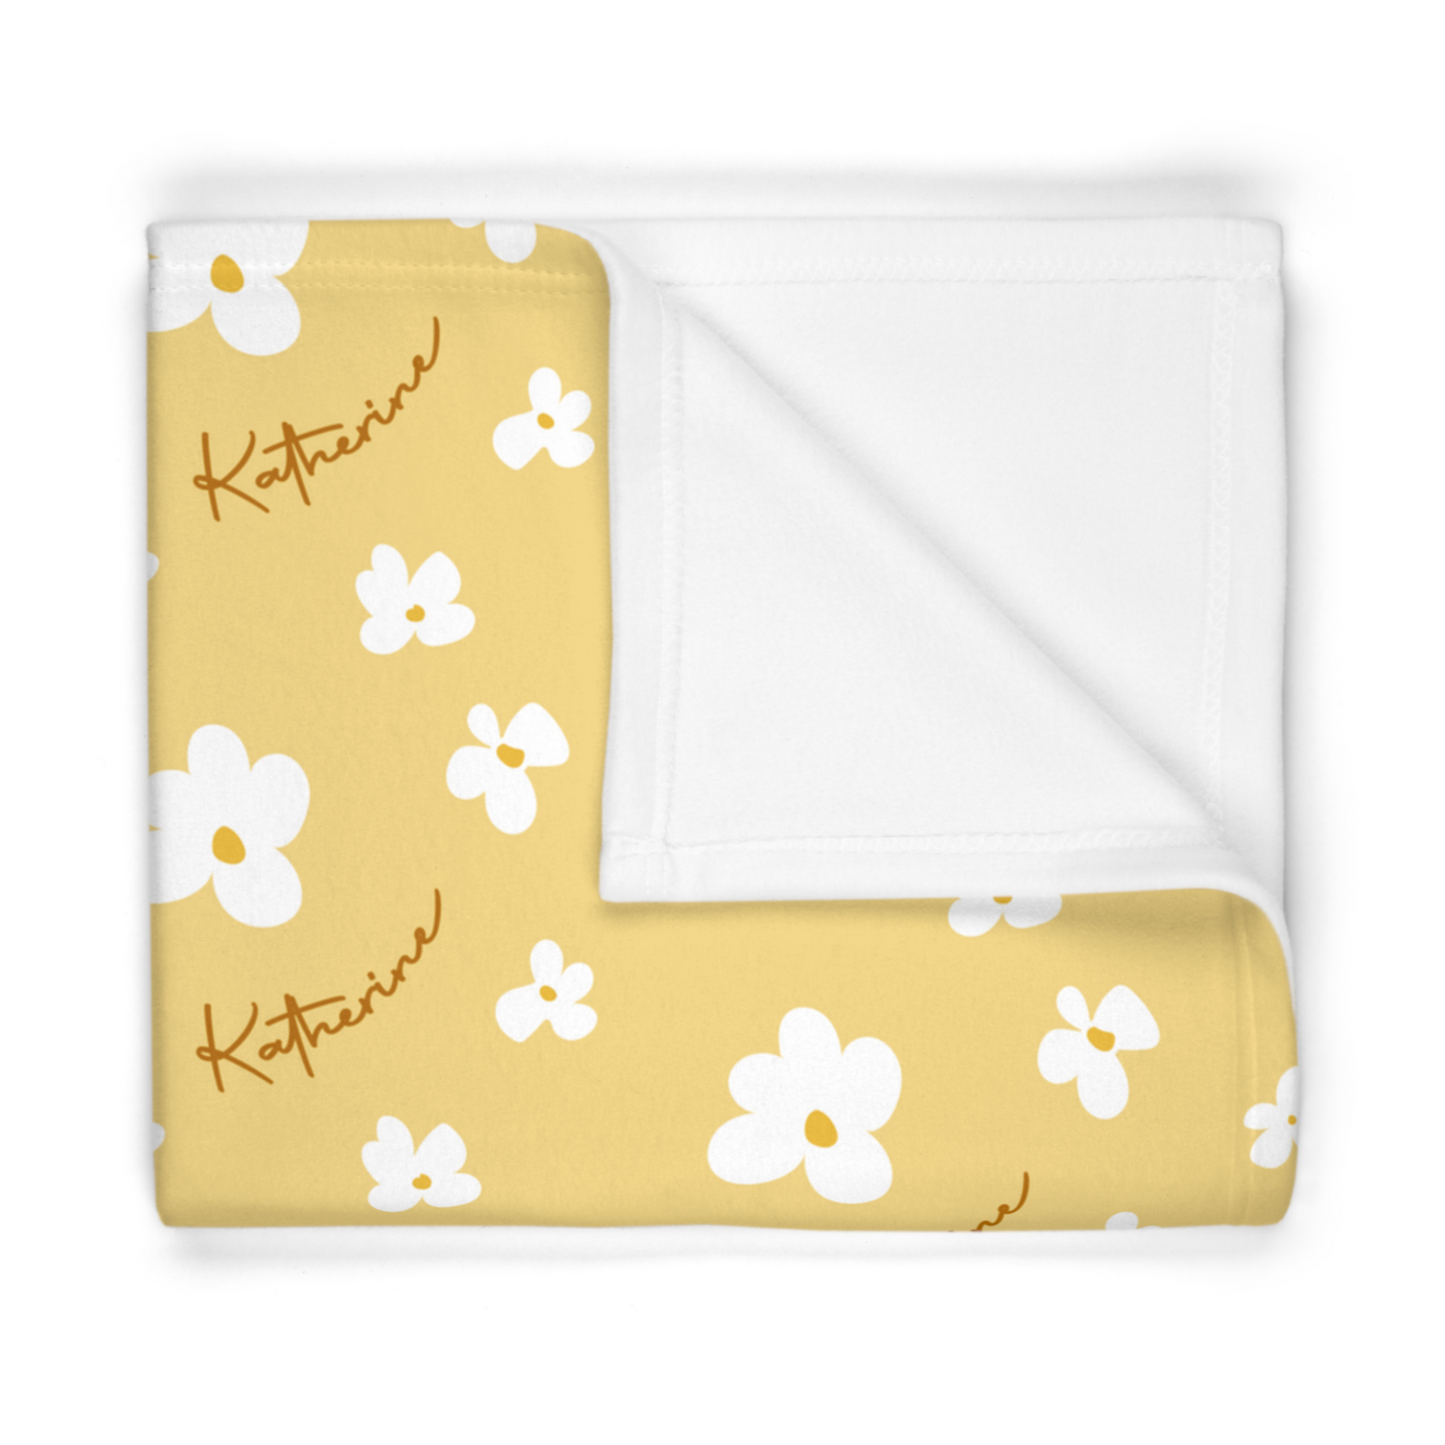 Folded fleece fabric personalized baby blanket in yellow daisy pattern